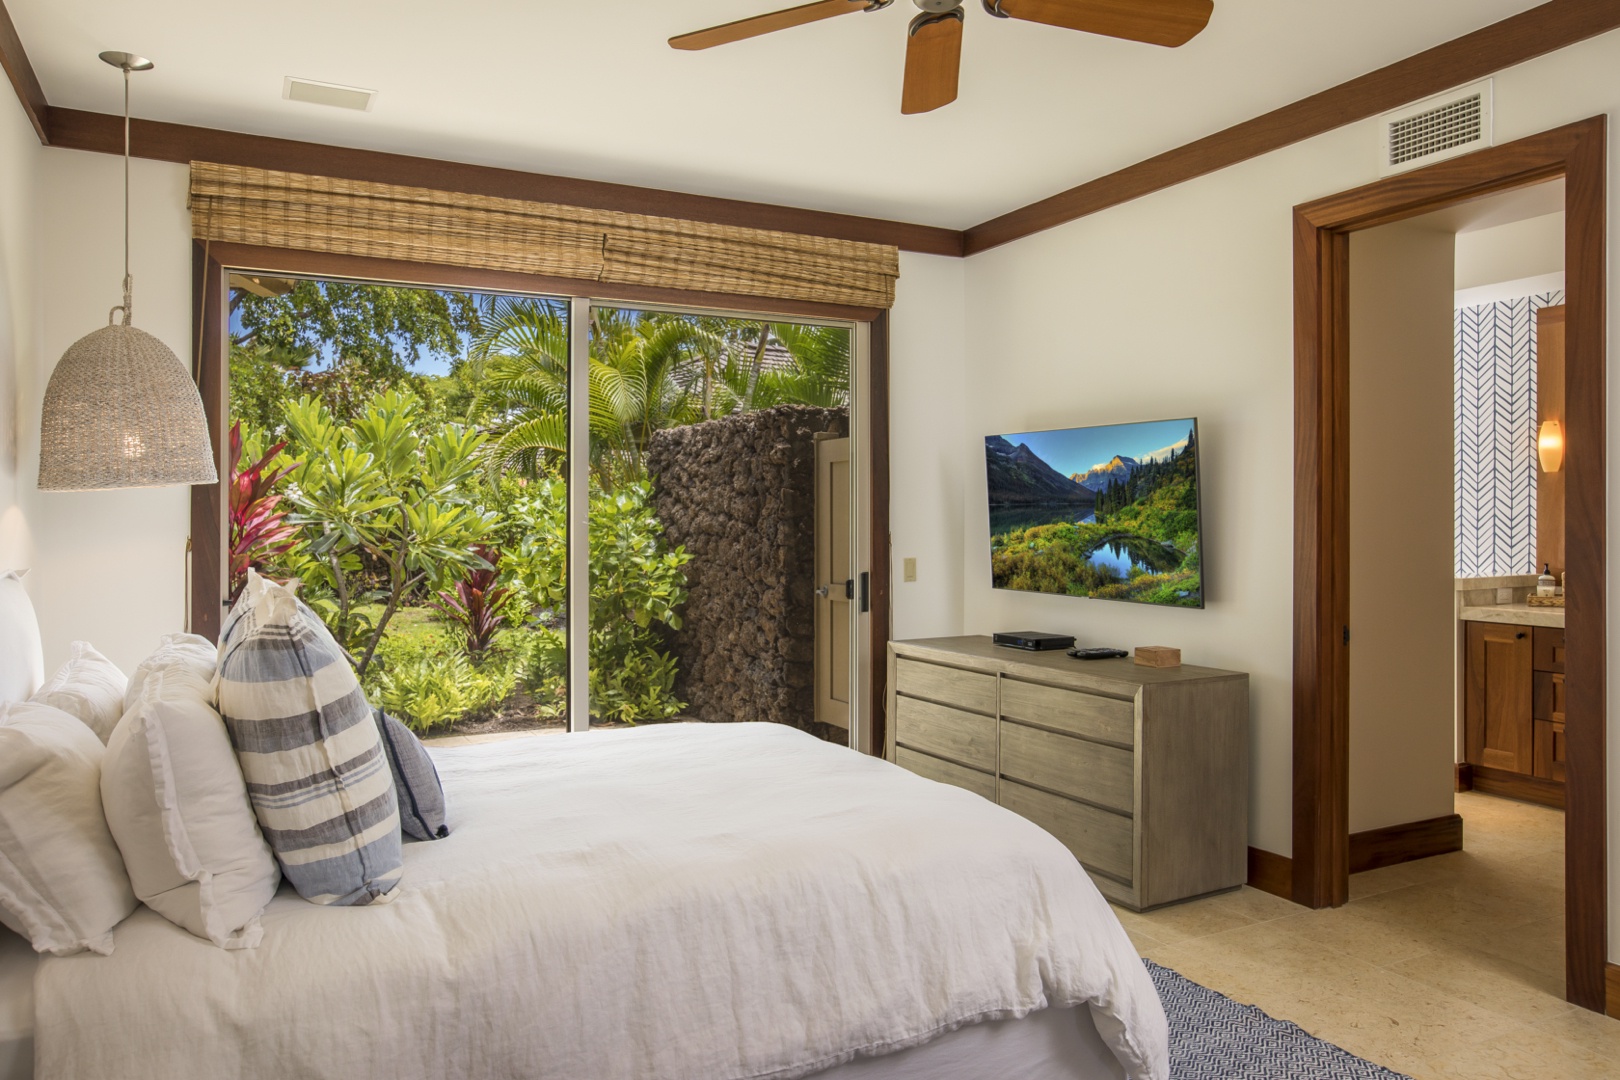 Kailua Kona Vacation Rentals, 4BD Kahikole Street (218) Estate Home at Four Seasons Resort at Hualalai - Reverse view featuring private lanai & wall-mounted television